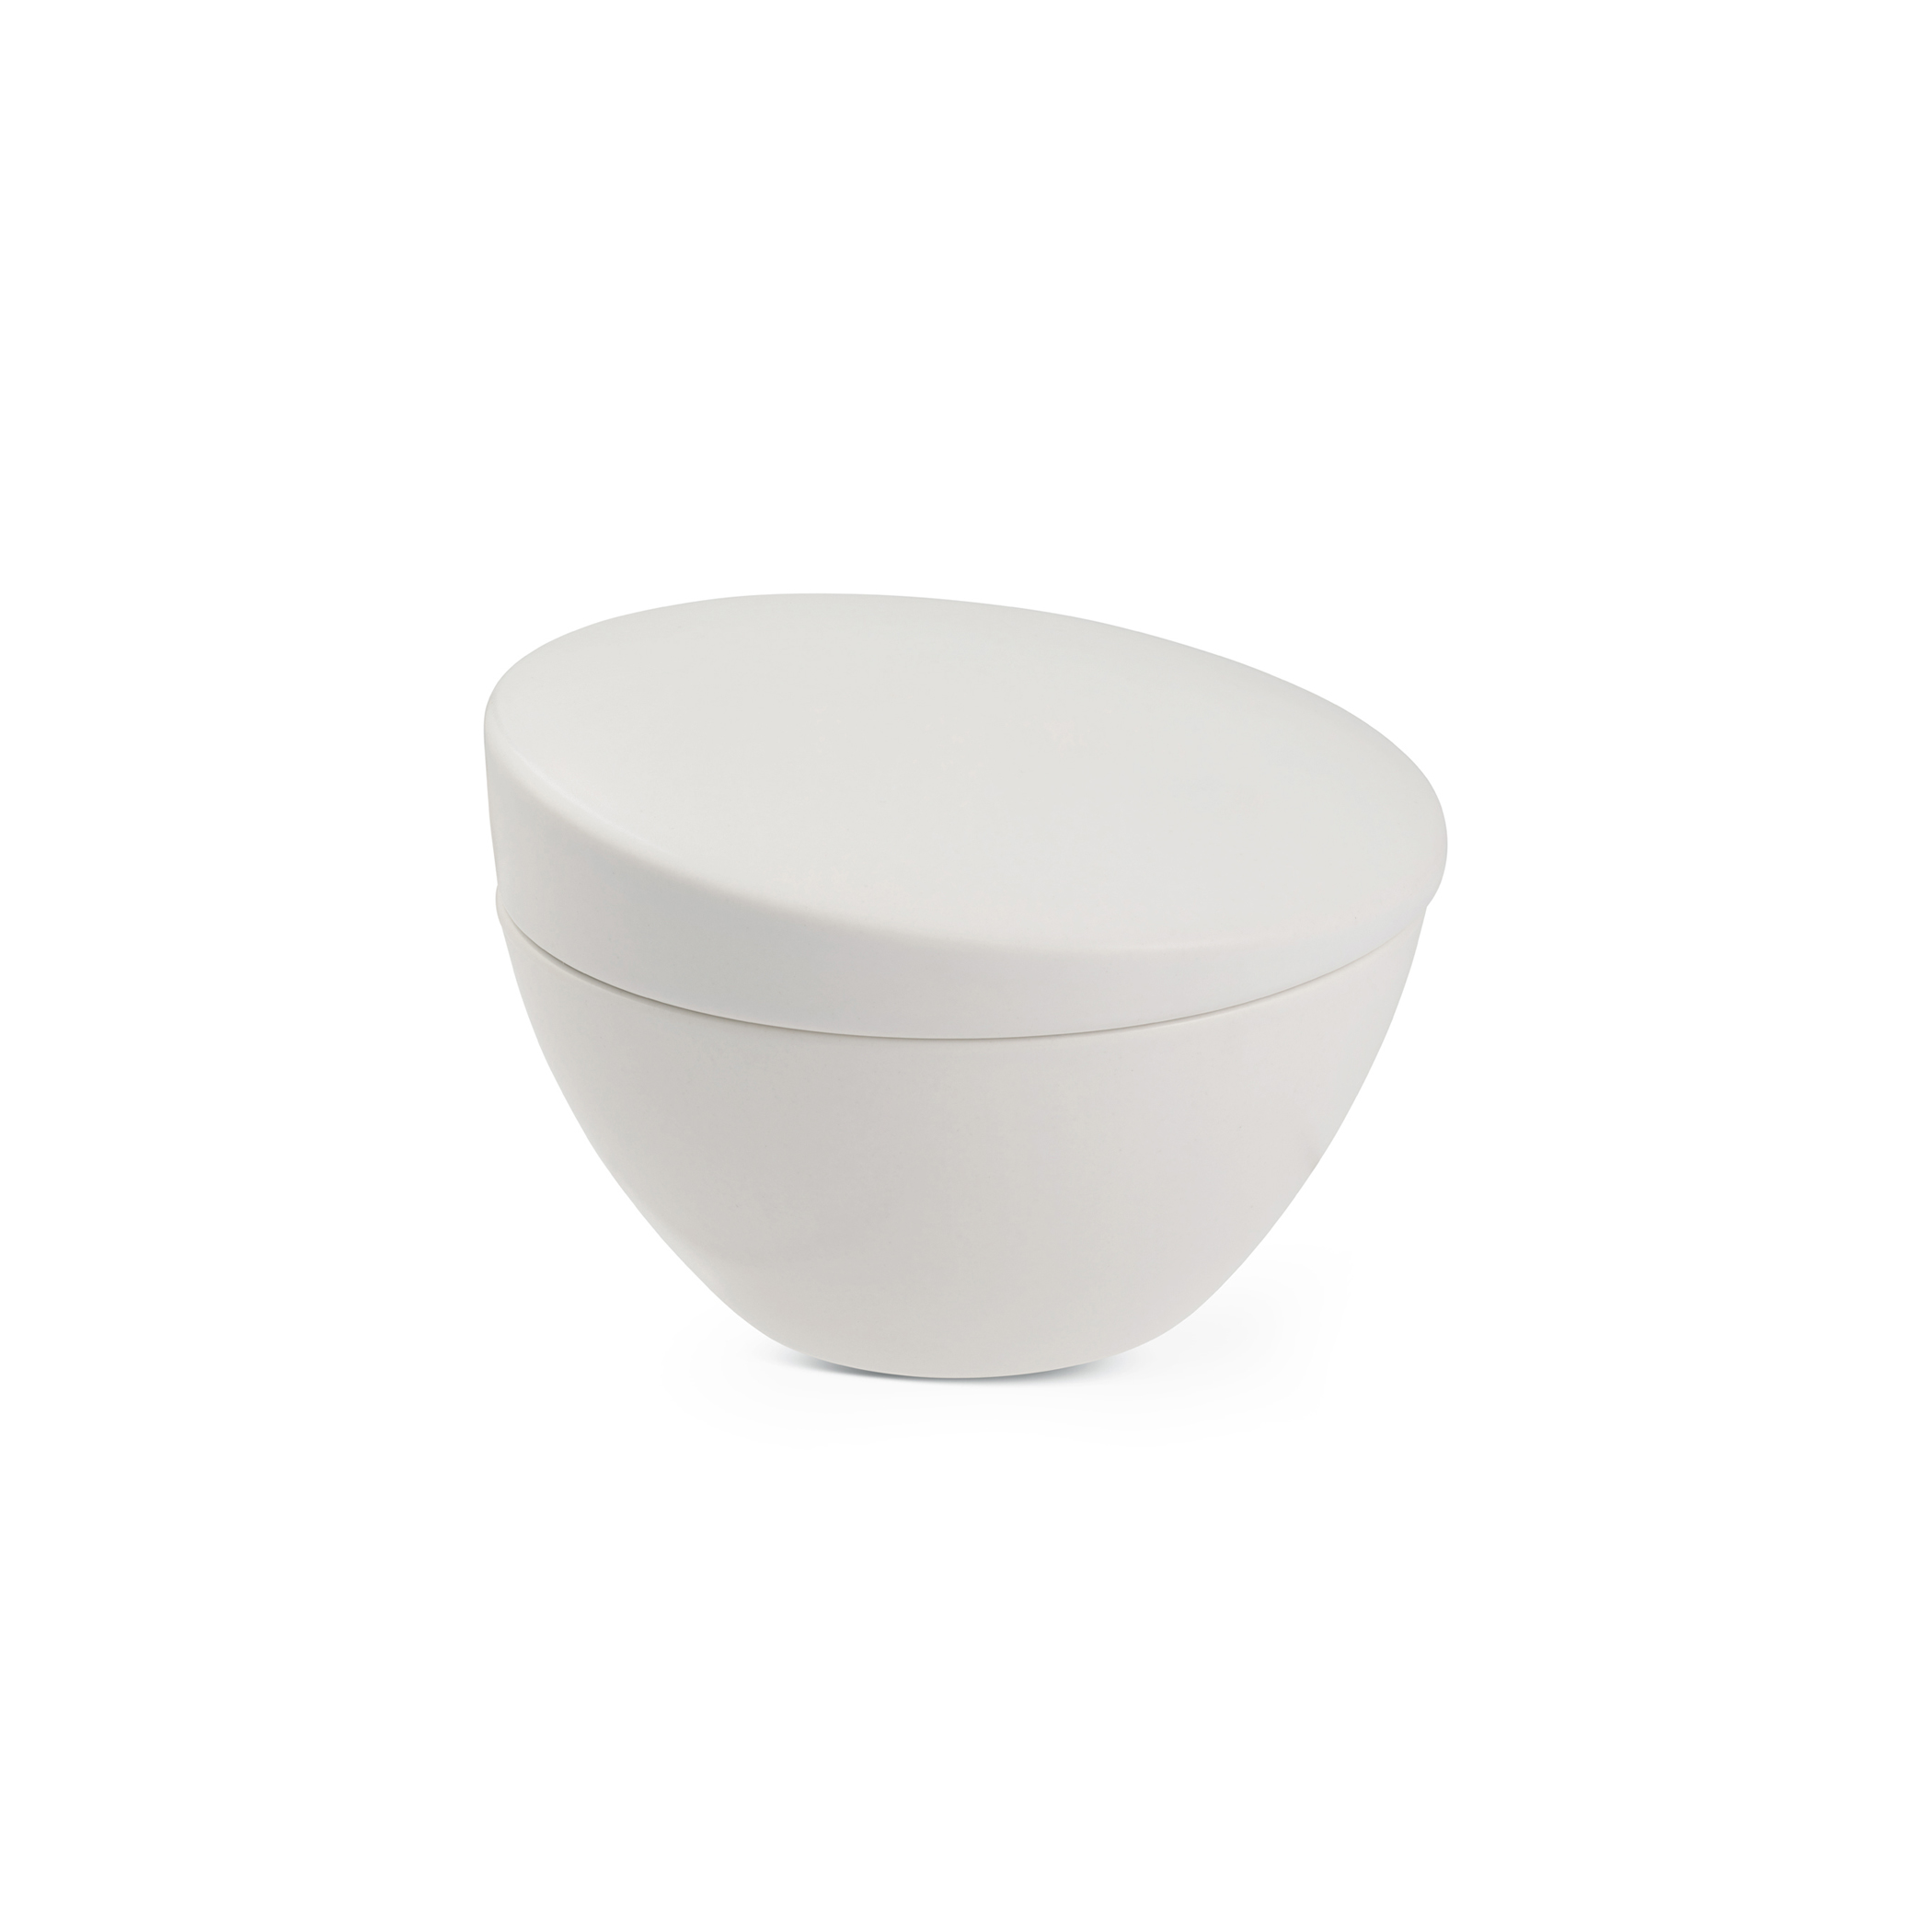 Orbit Sugar Bowl - Starry White image number null